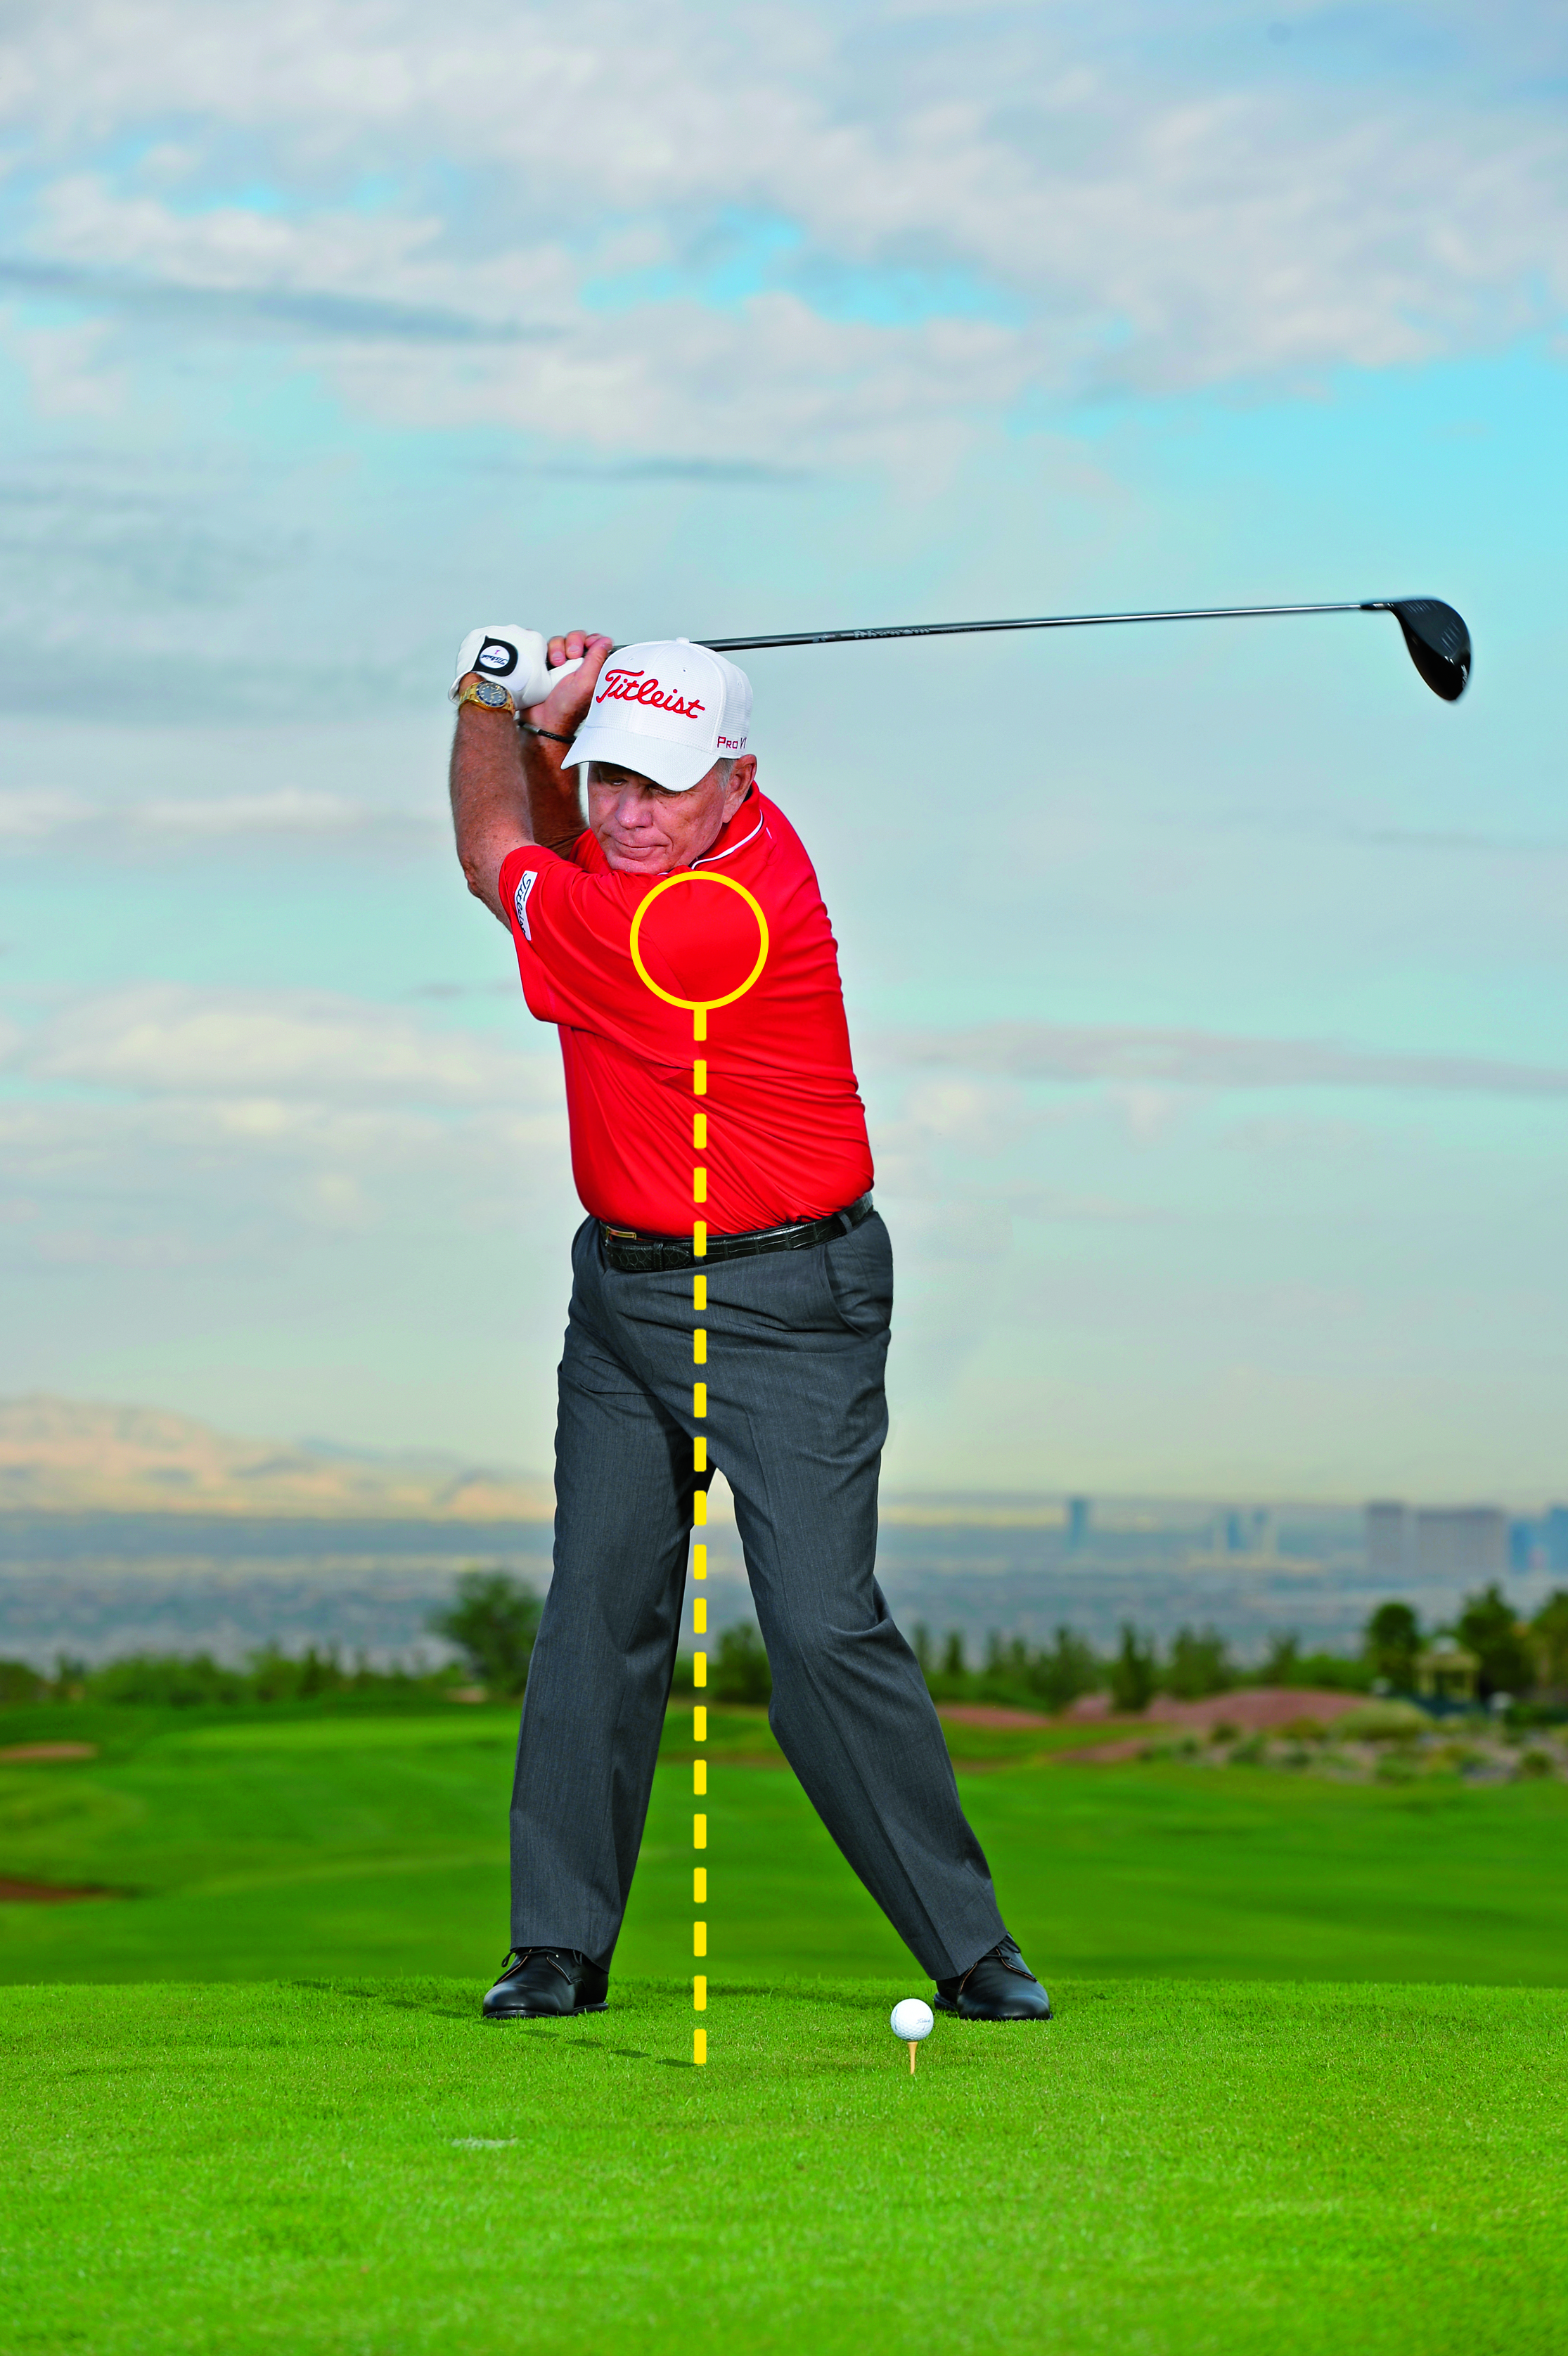 Ways to Improve Golf Hitting Skills